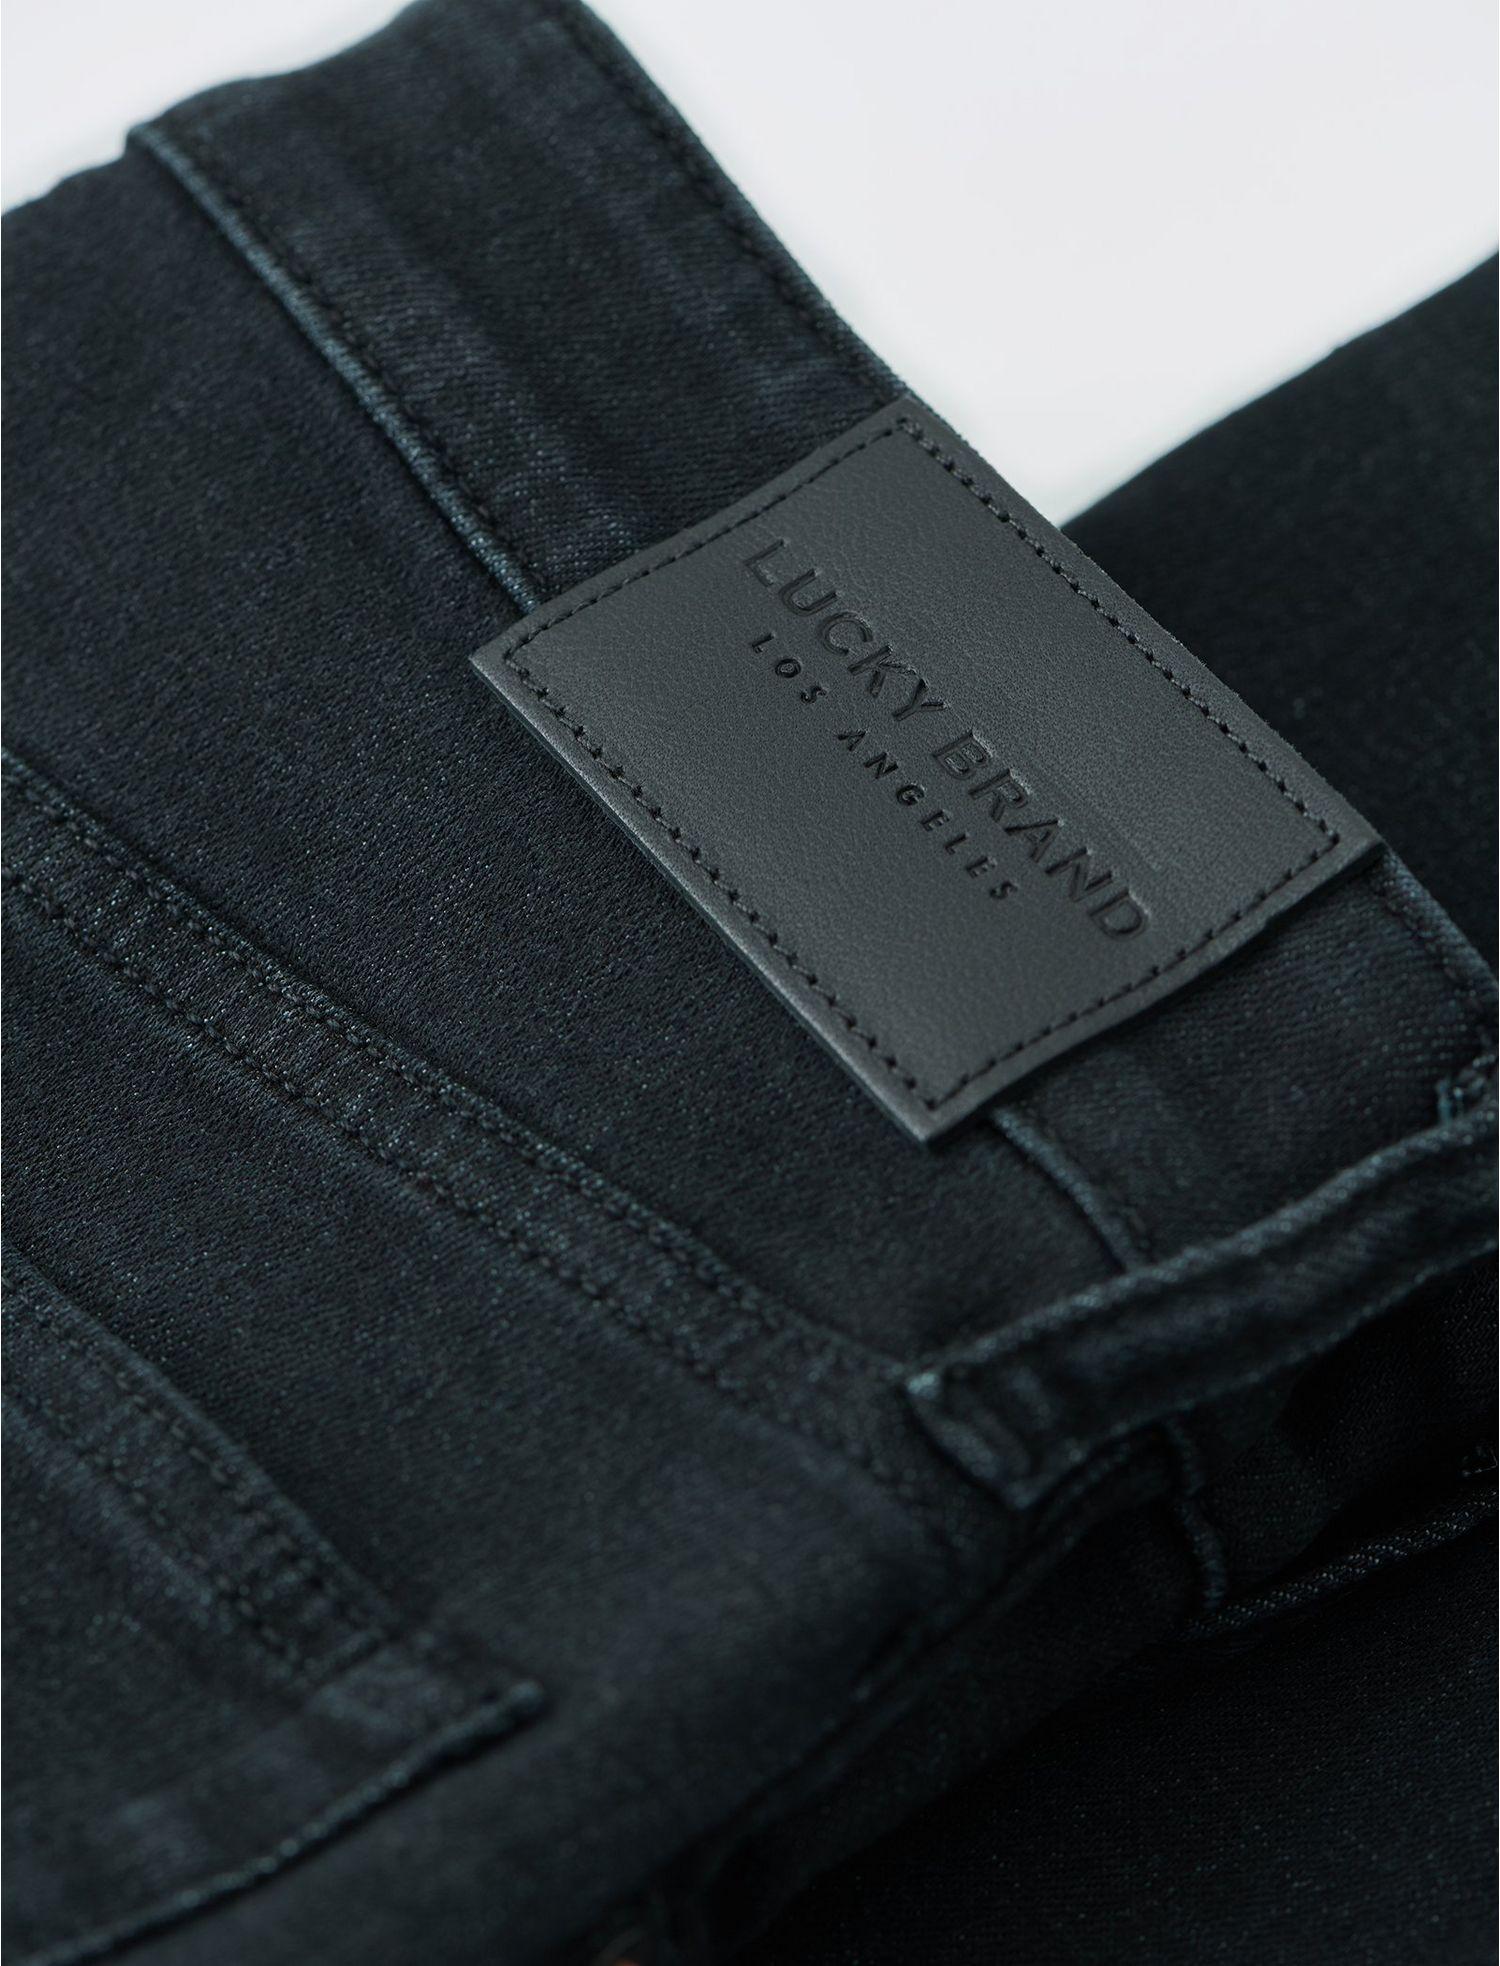 Lucky Brand Cotton 121 Slim Straight Coolmax Jean in Black for Men - Lyst